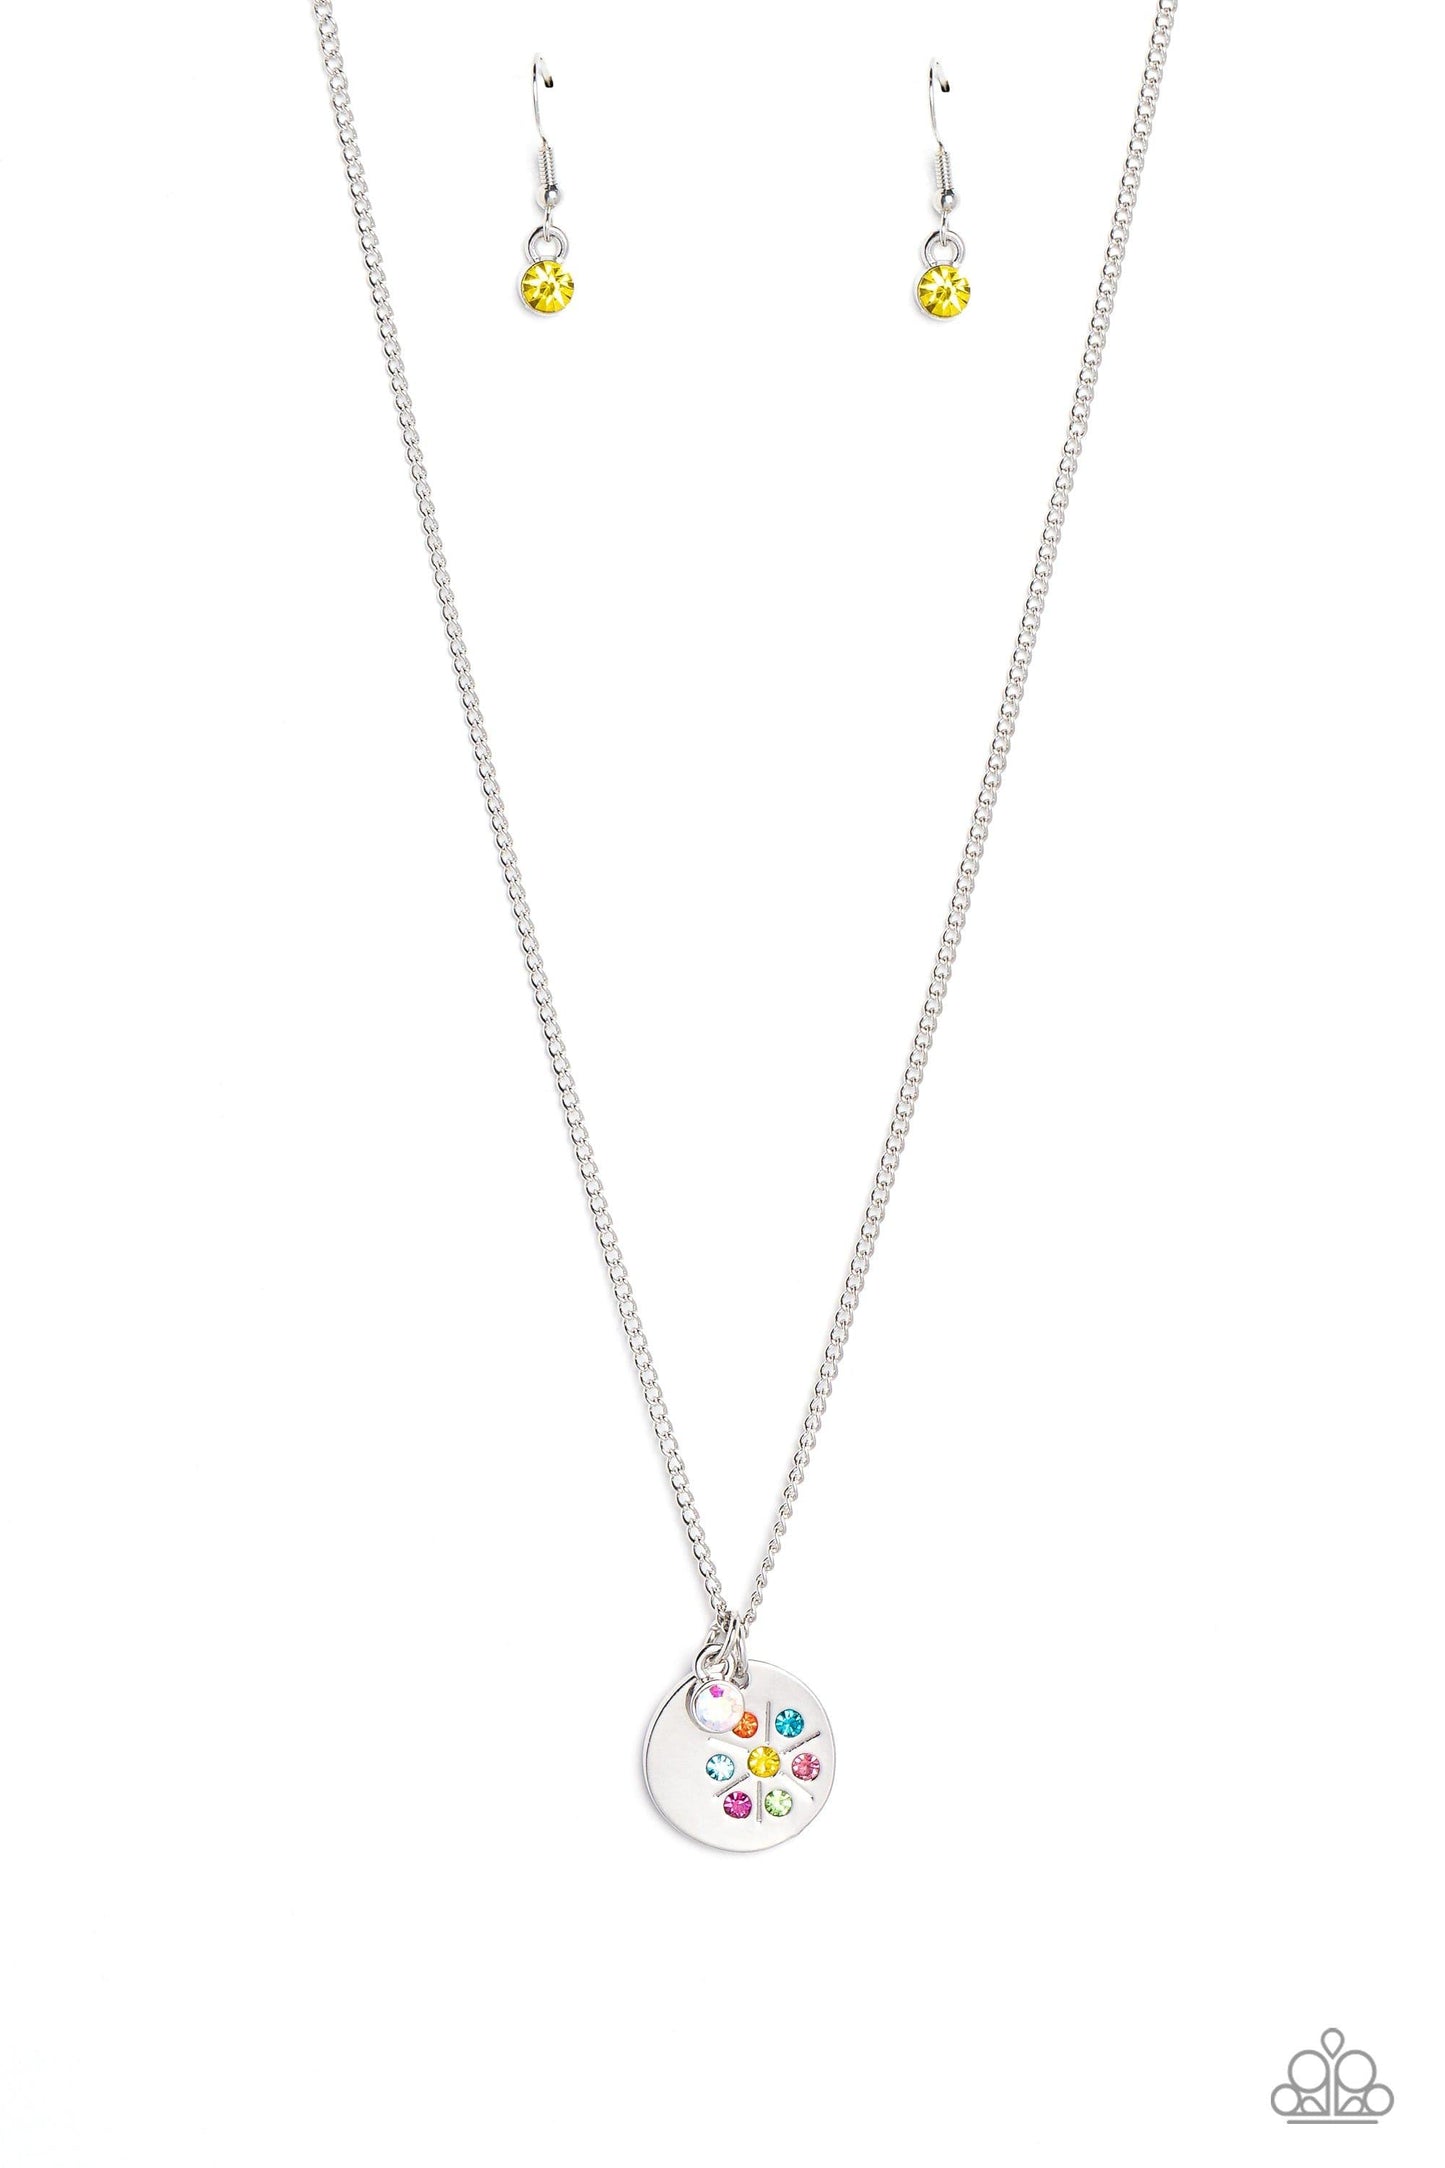 Paparazzi Accessories - Dandelion Delight - Multicolor Necklace - Bling by JessieK